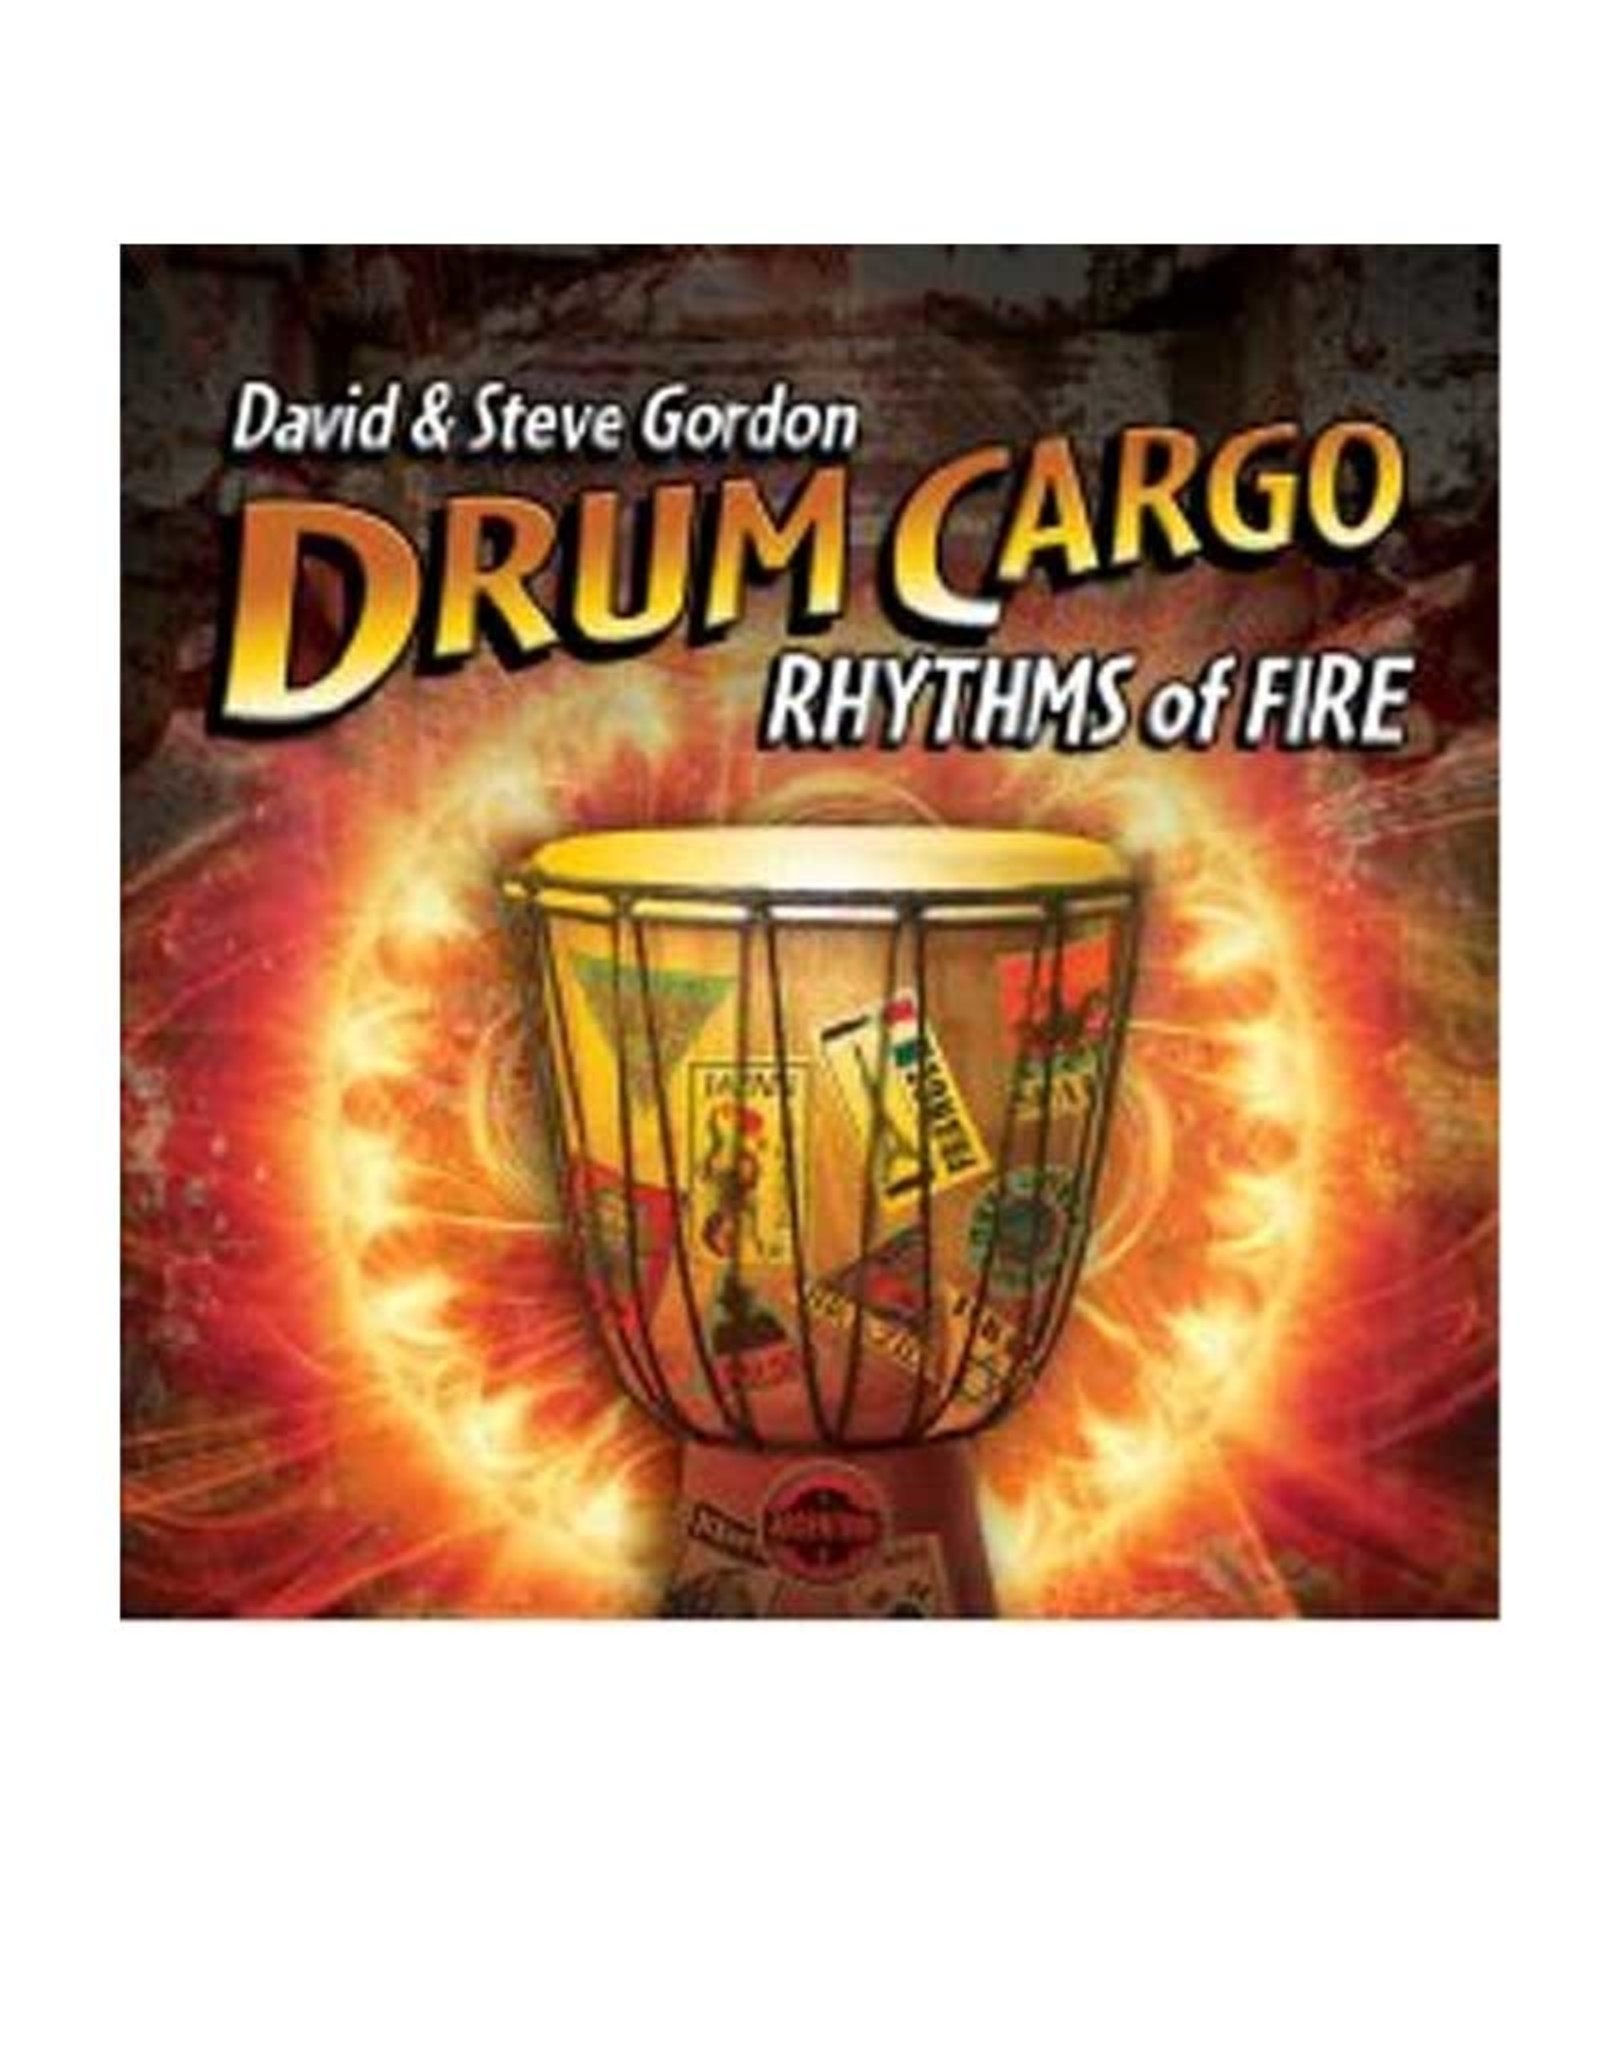 David Gordon Drum Cargo Rhythms of Fire CD by David & Steve Gordon